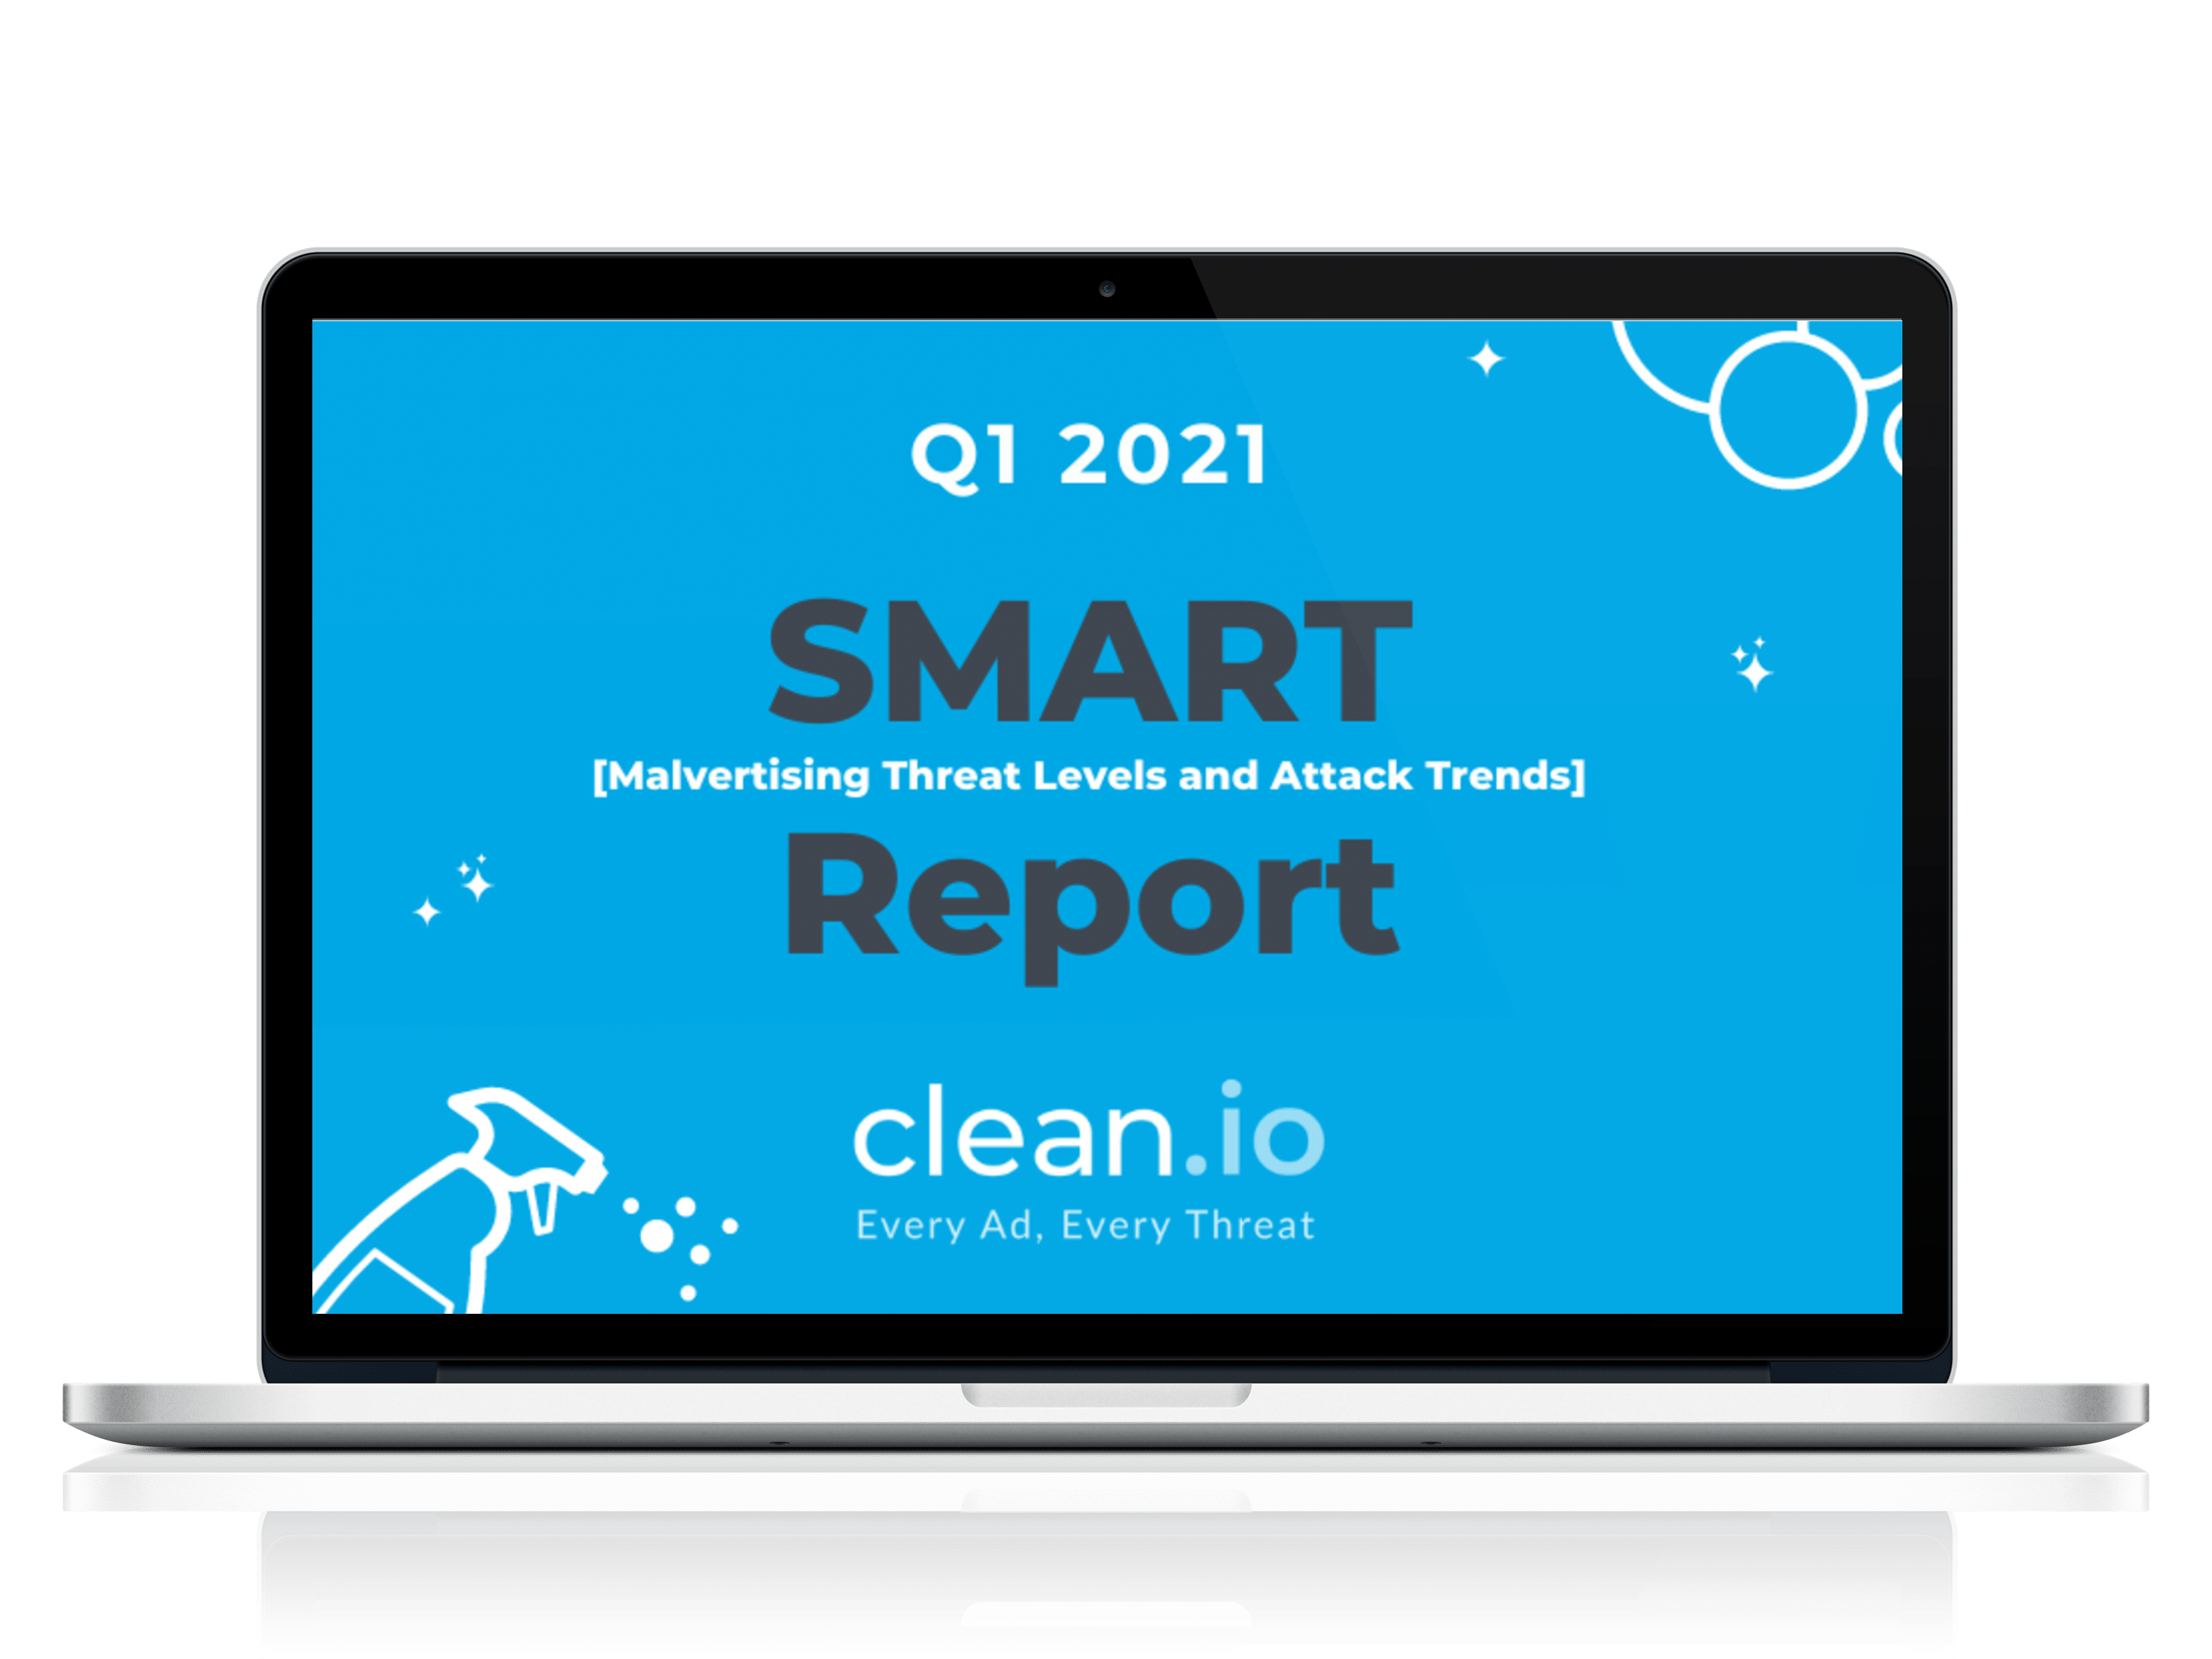 Q1 2021 Smart Report